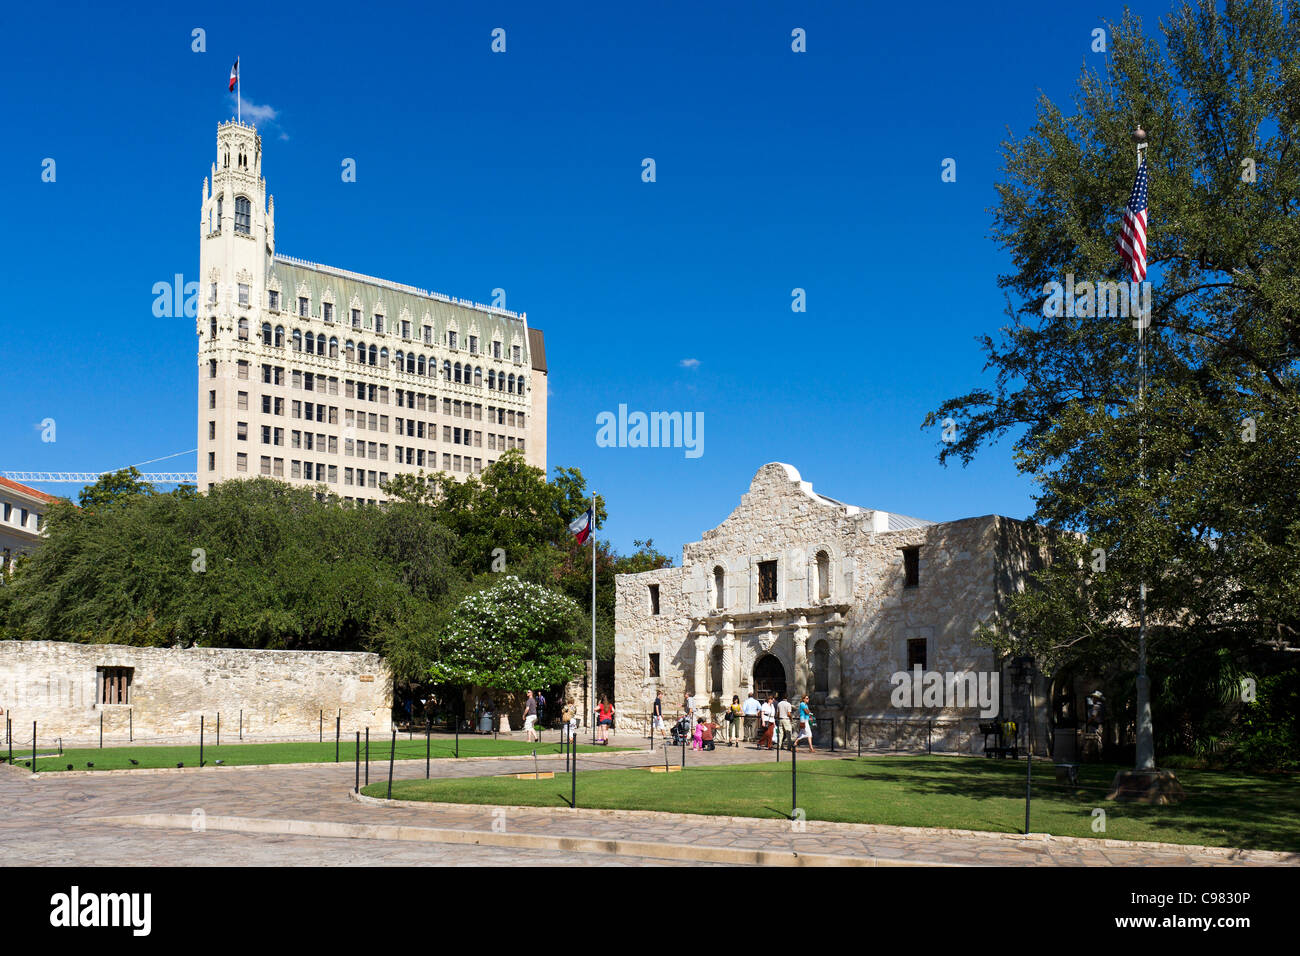 Alamo Plaza looking towards the Emily Morgan Hotel and The Alamo Mission, site of the famous battle, San Antonio, Texas, USA Stock Photo